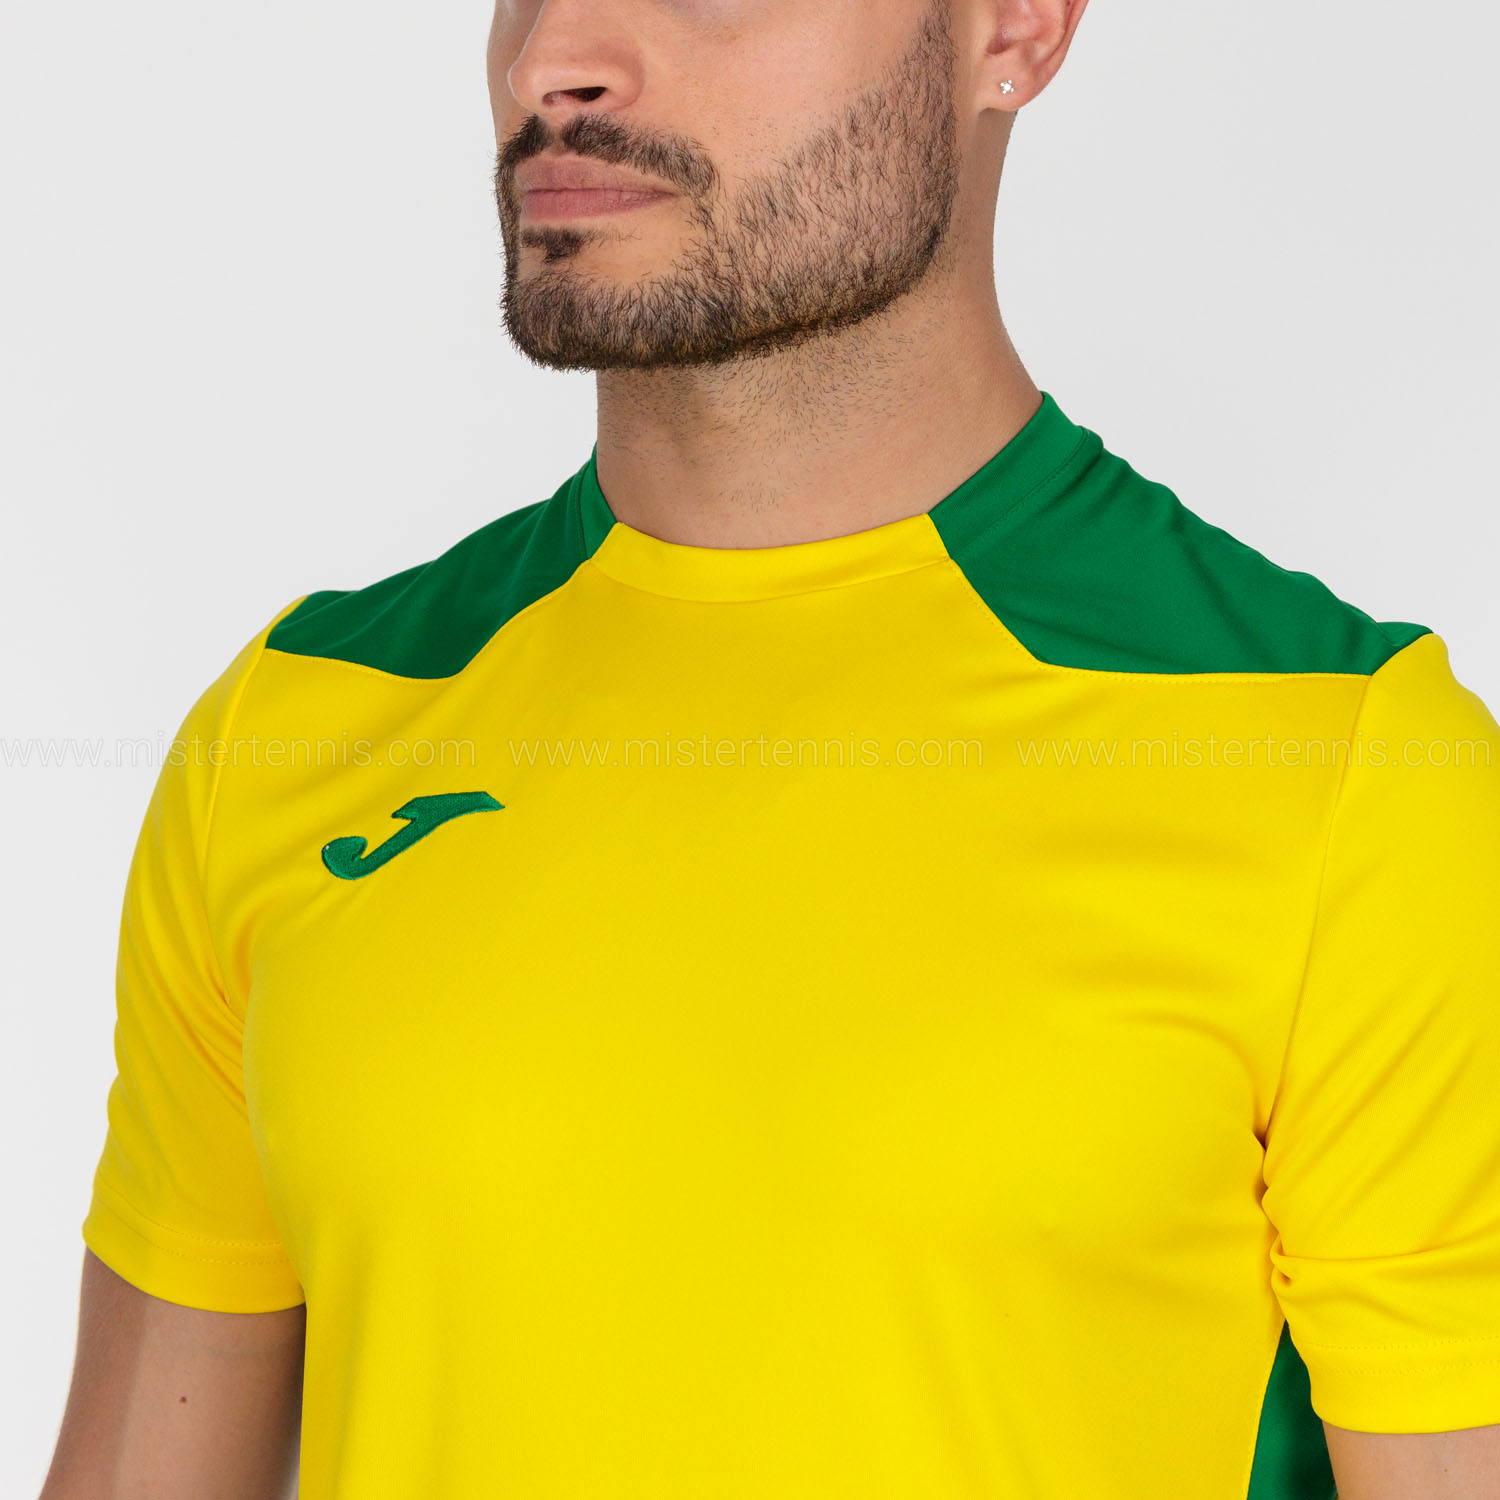 Joma Championship VI Camiseta - Yellow/Green